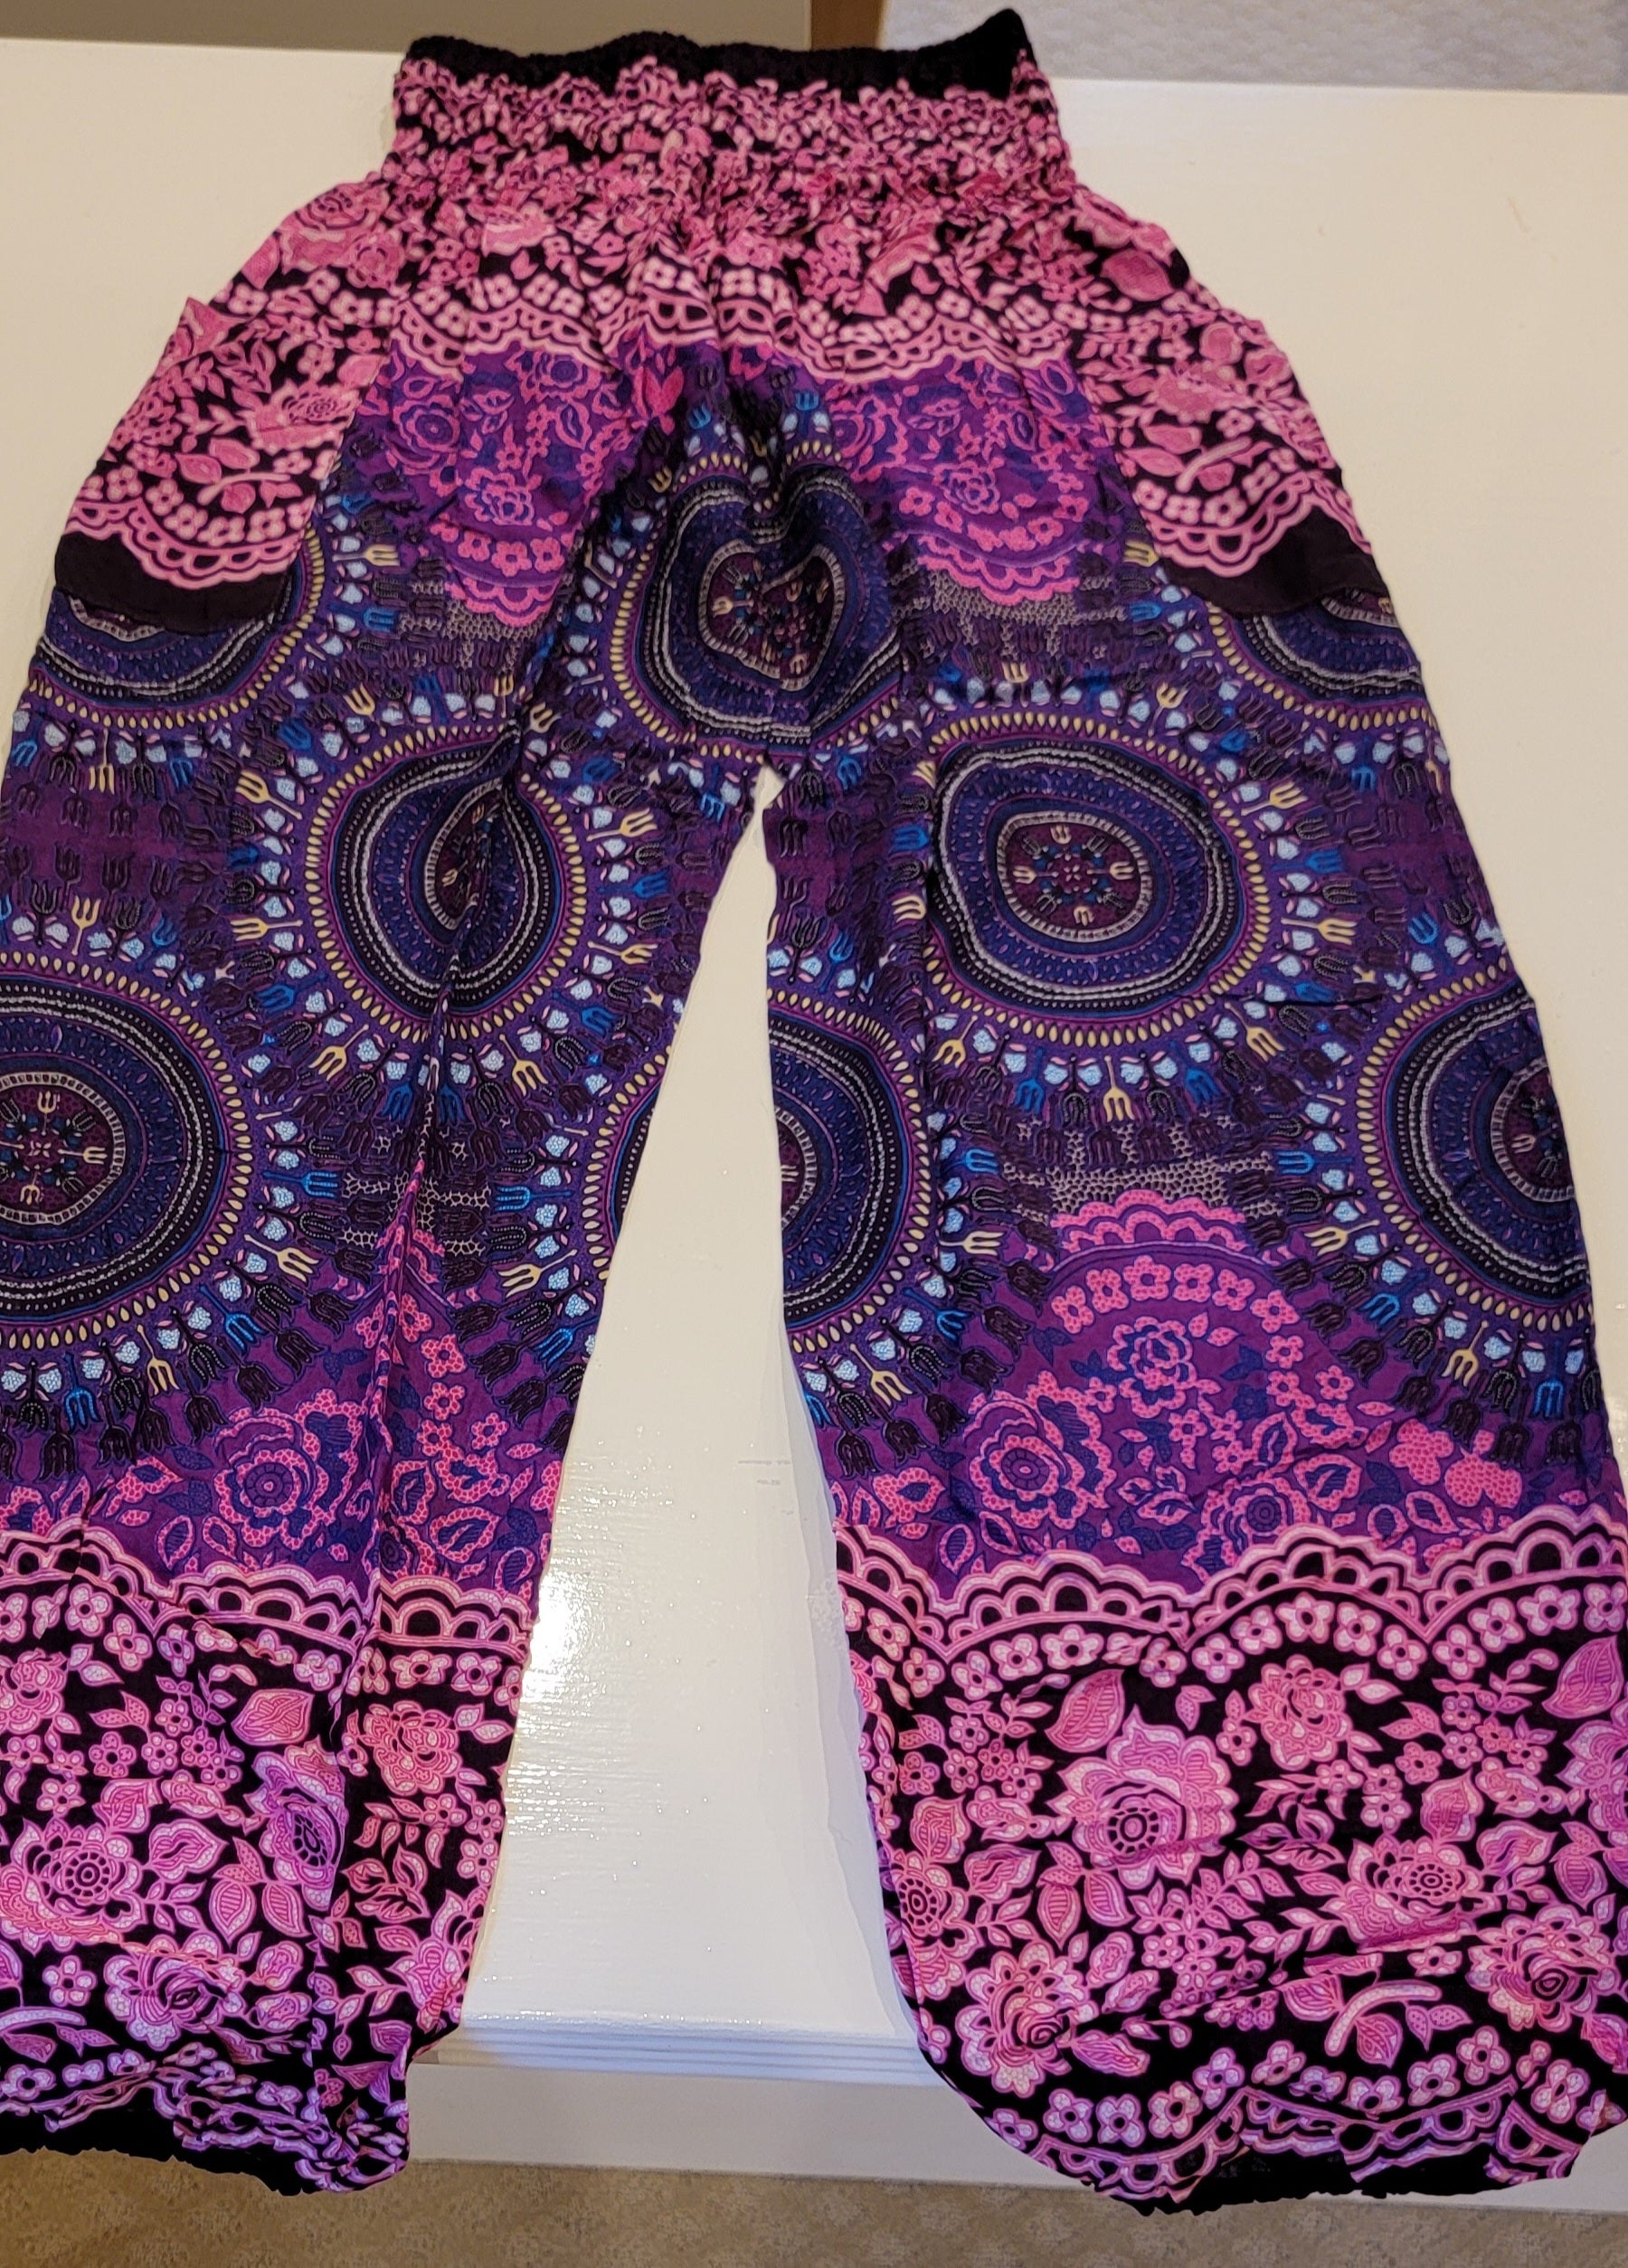 Boho Chic Harem Pants For Women - Poseidon's Pink - 100% Rayon